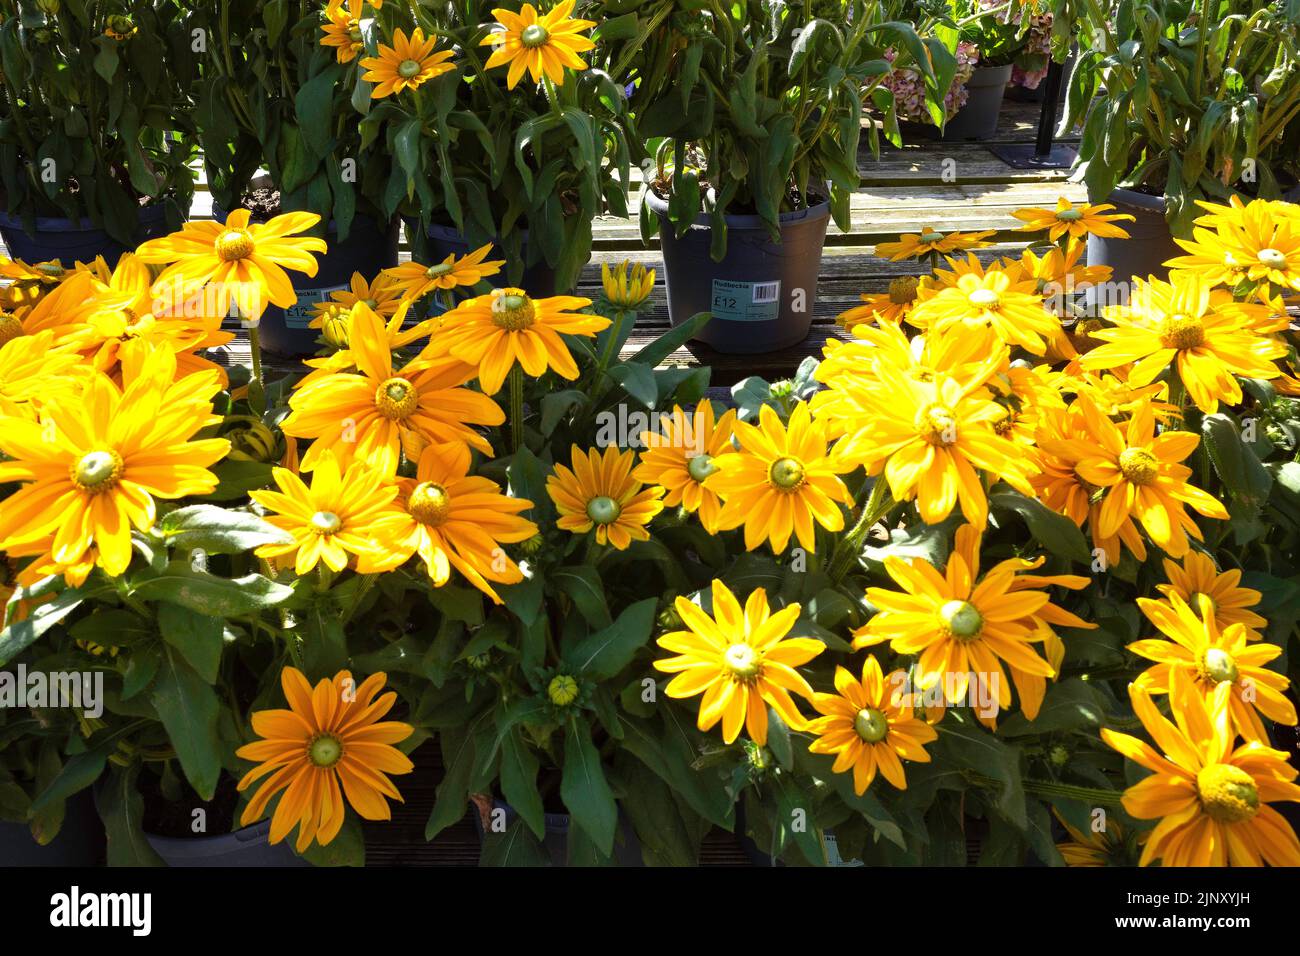 Bright yellow daisy like flowers of Rudbeckia Sunbeckia a hardy perennial garden  flower Stock Photo